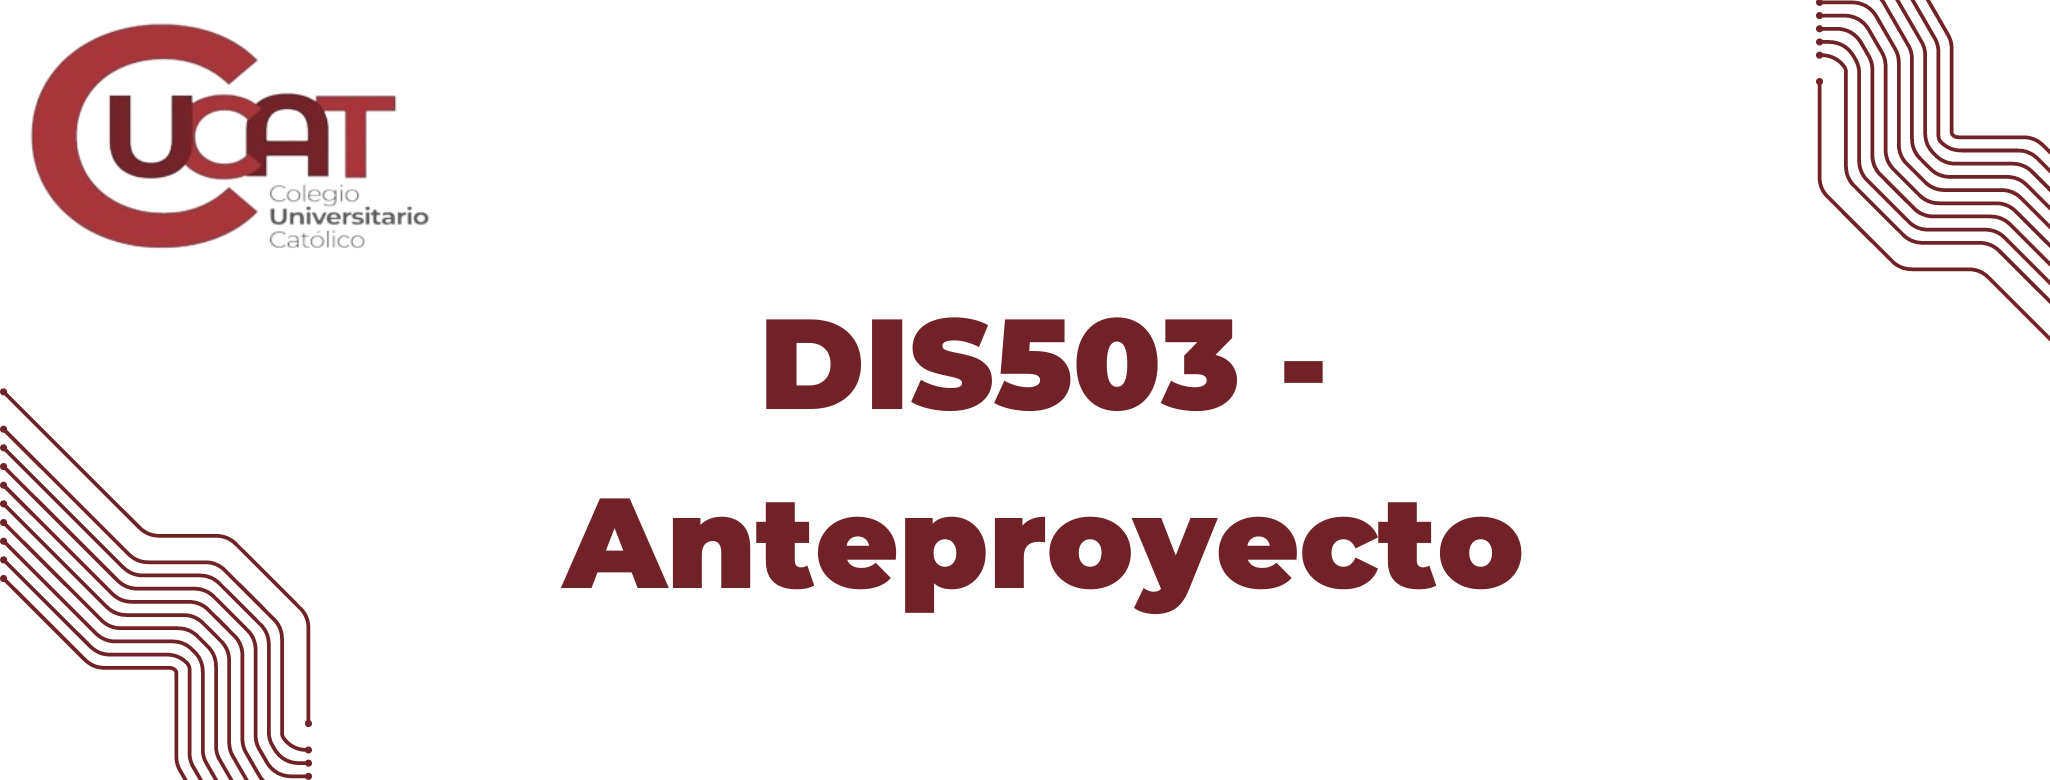 DIS503-Anteproyecto